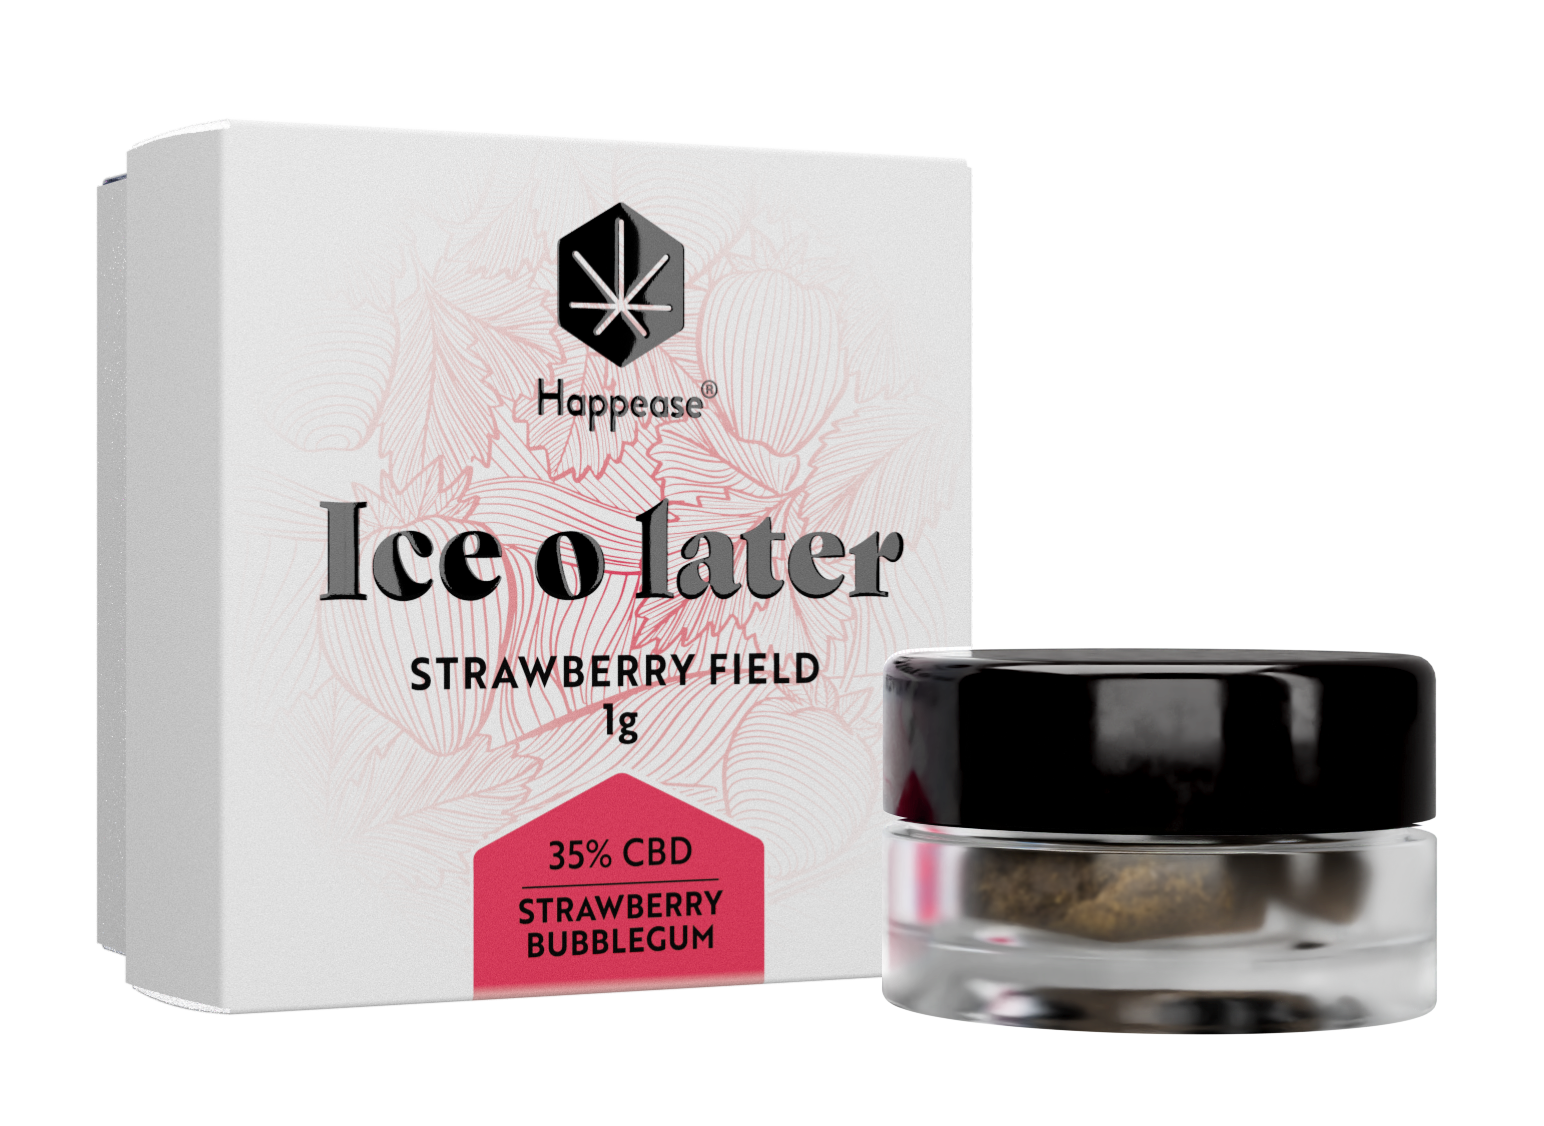 Ice o later Strawberry Field 35% CBD